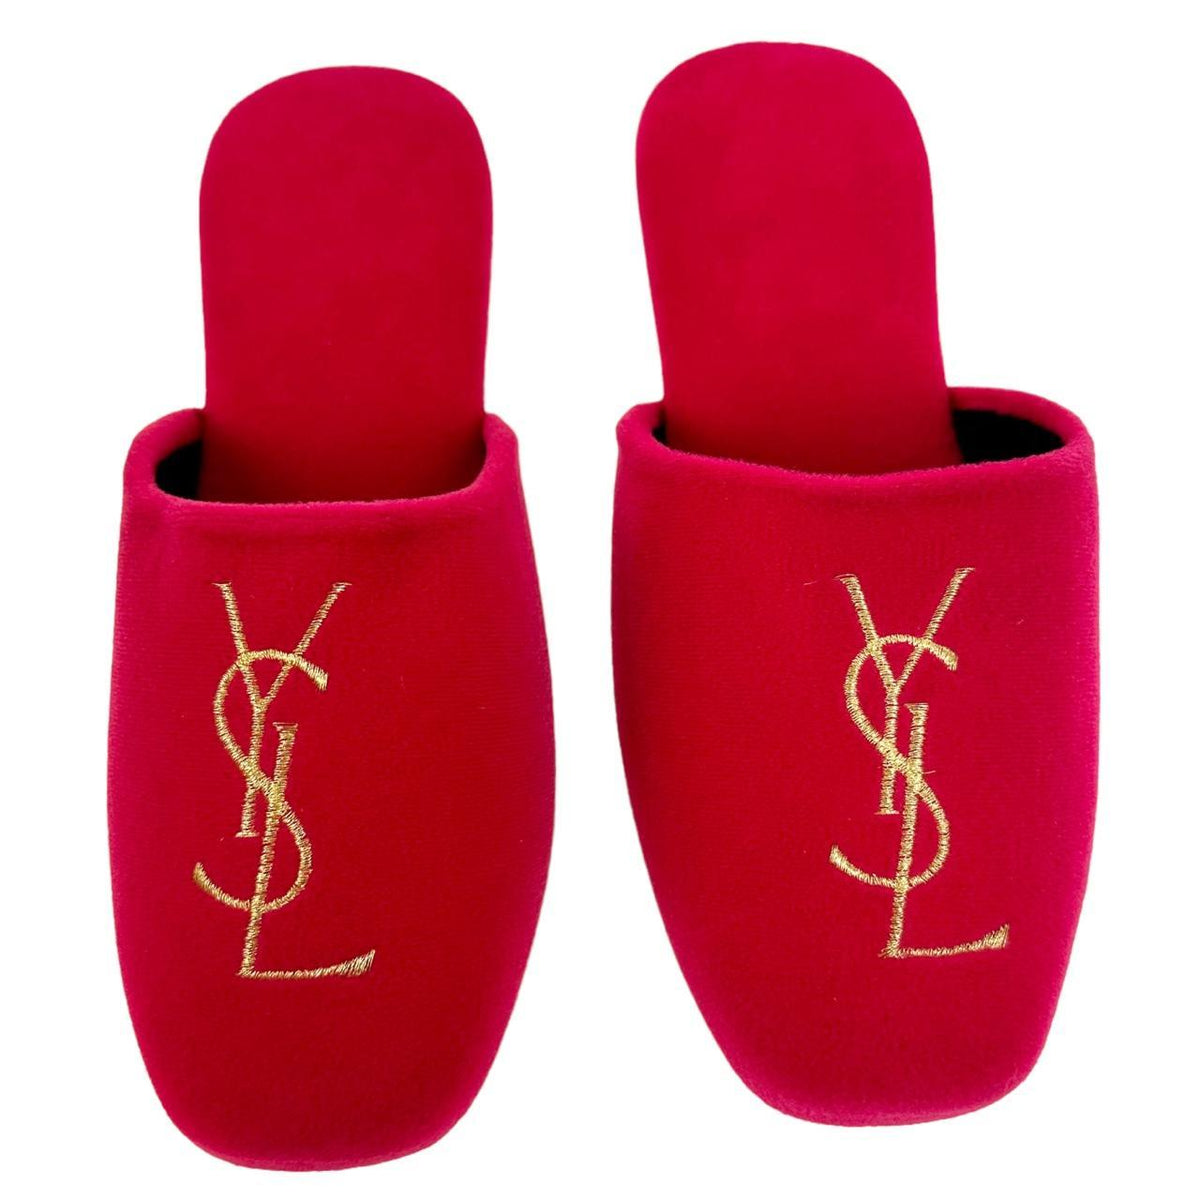 Vintage YSL Yves Saint Laurent Slippers Woman’s Size UK 5